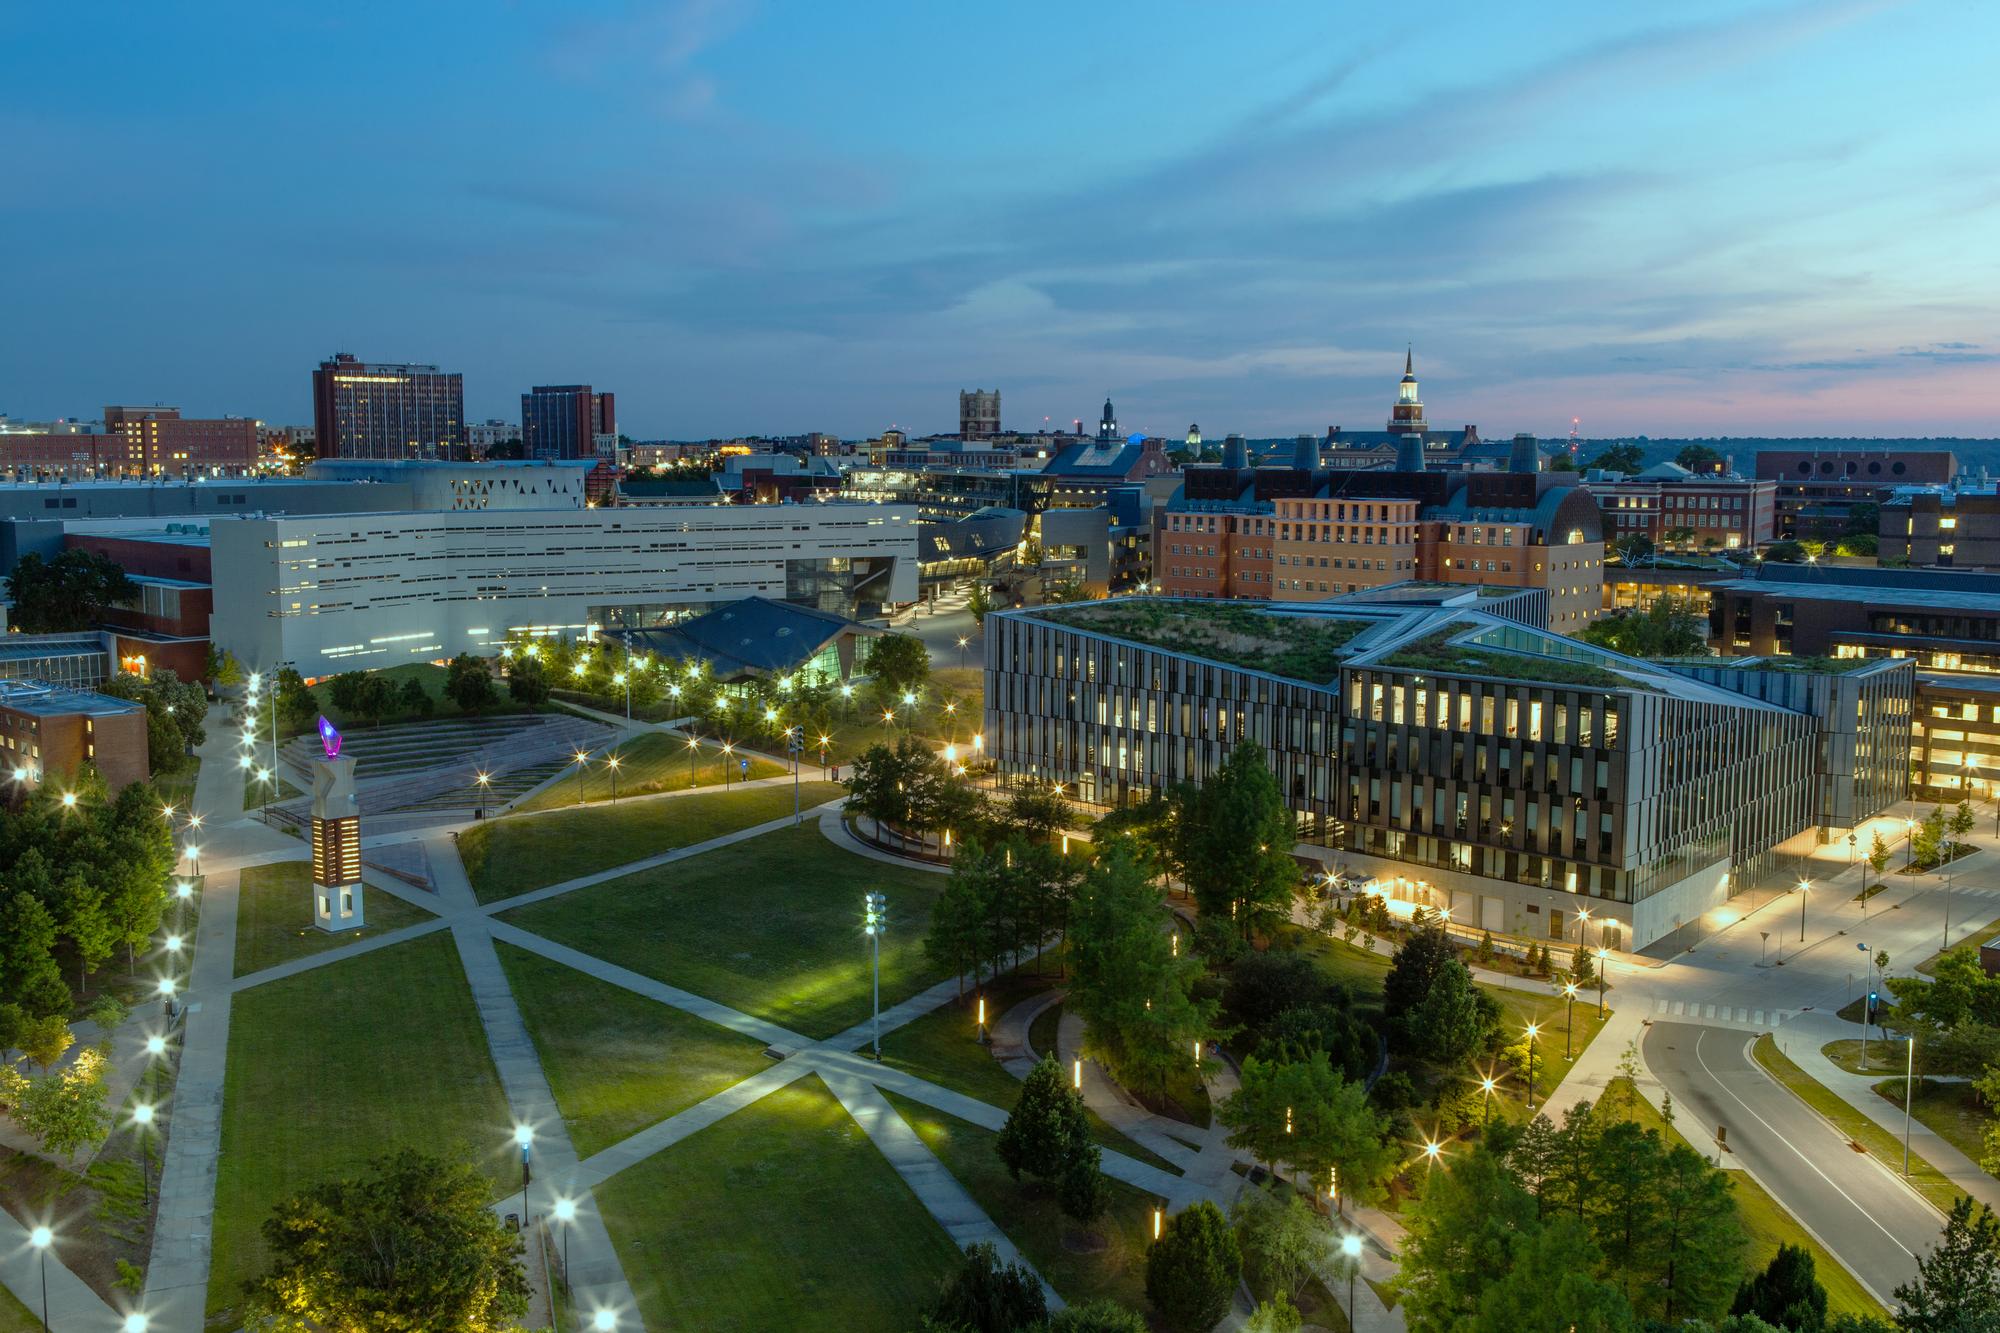 Ariel view of the University of Cincinnati campus